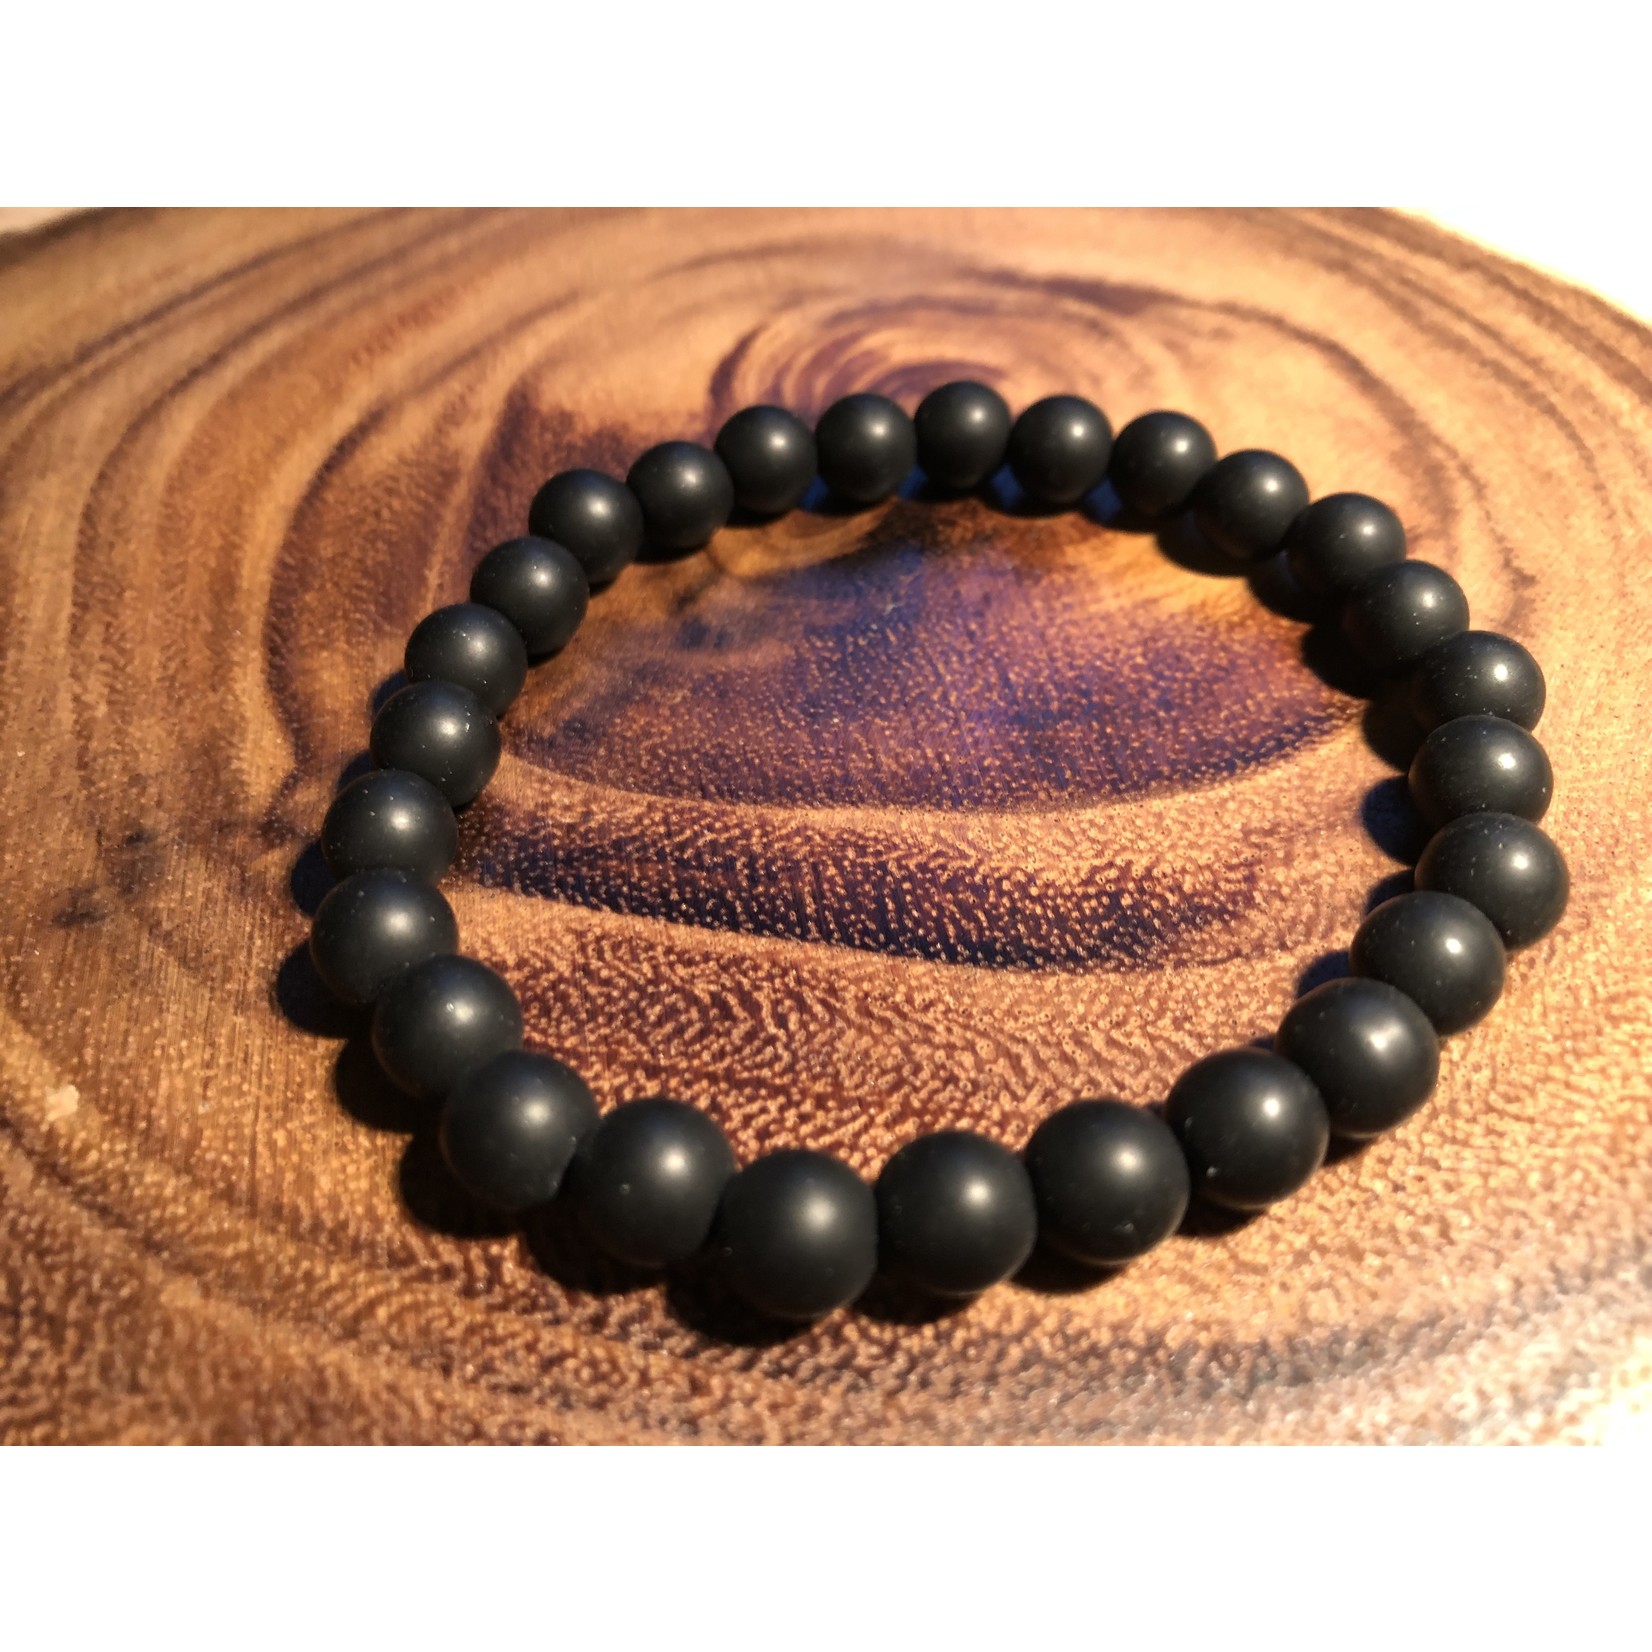 21cm Natural Stone Bracelets - Harmony and Authenticity